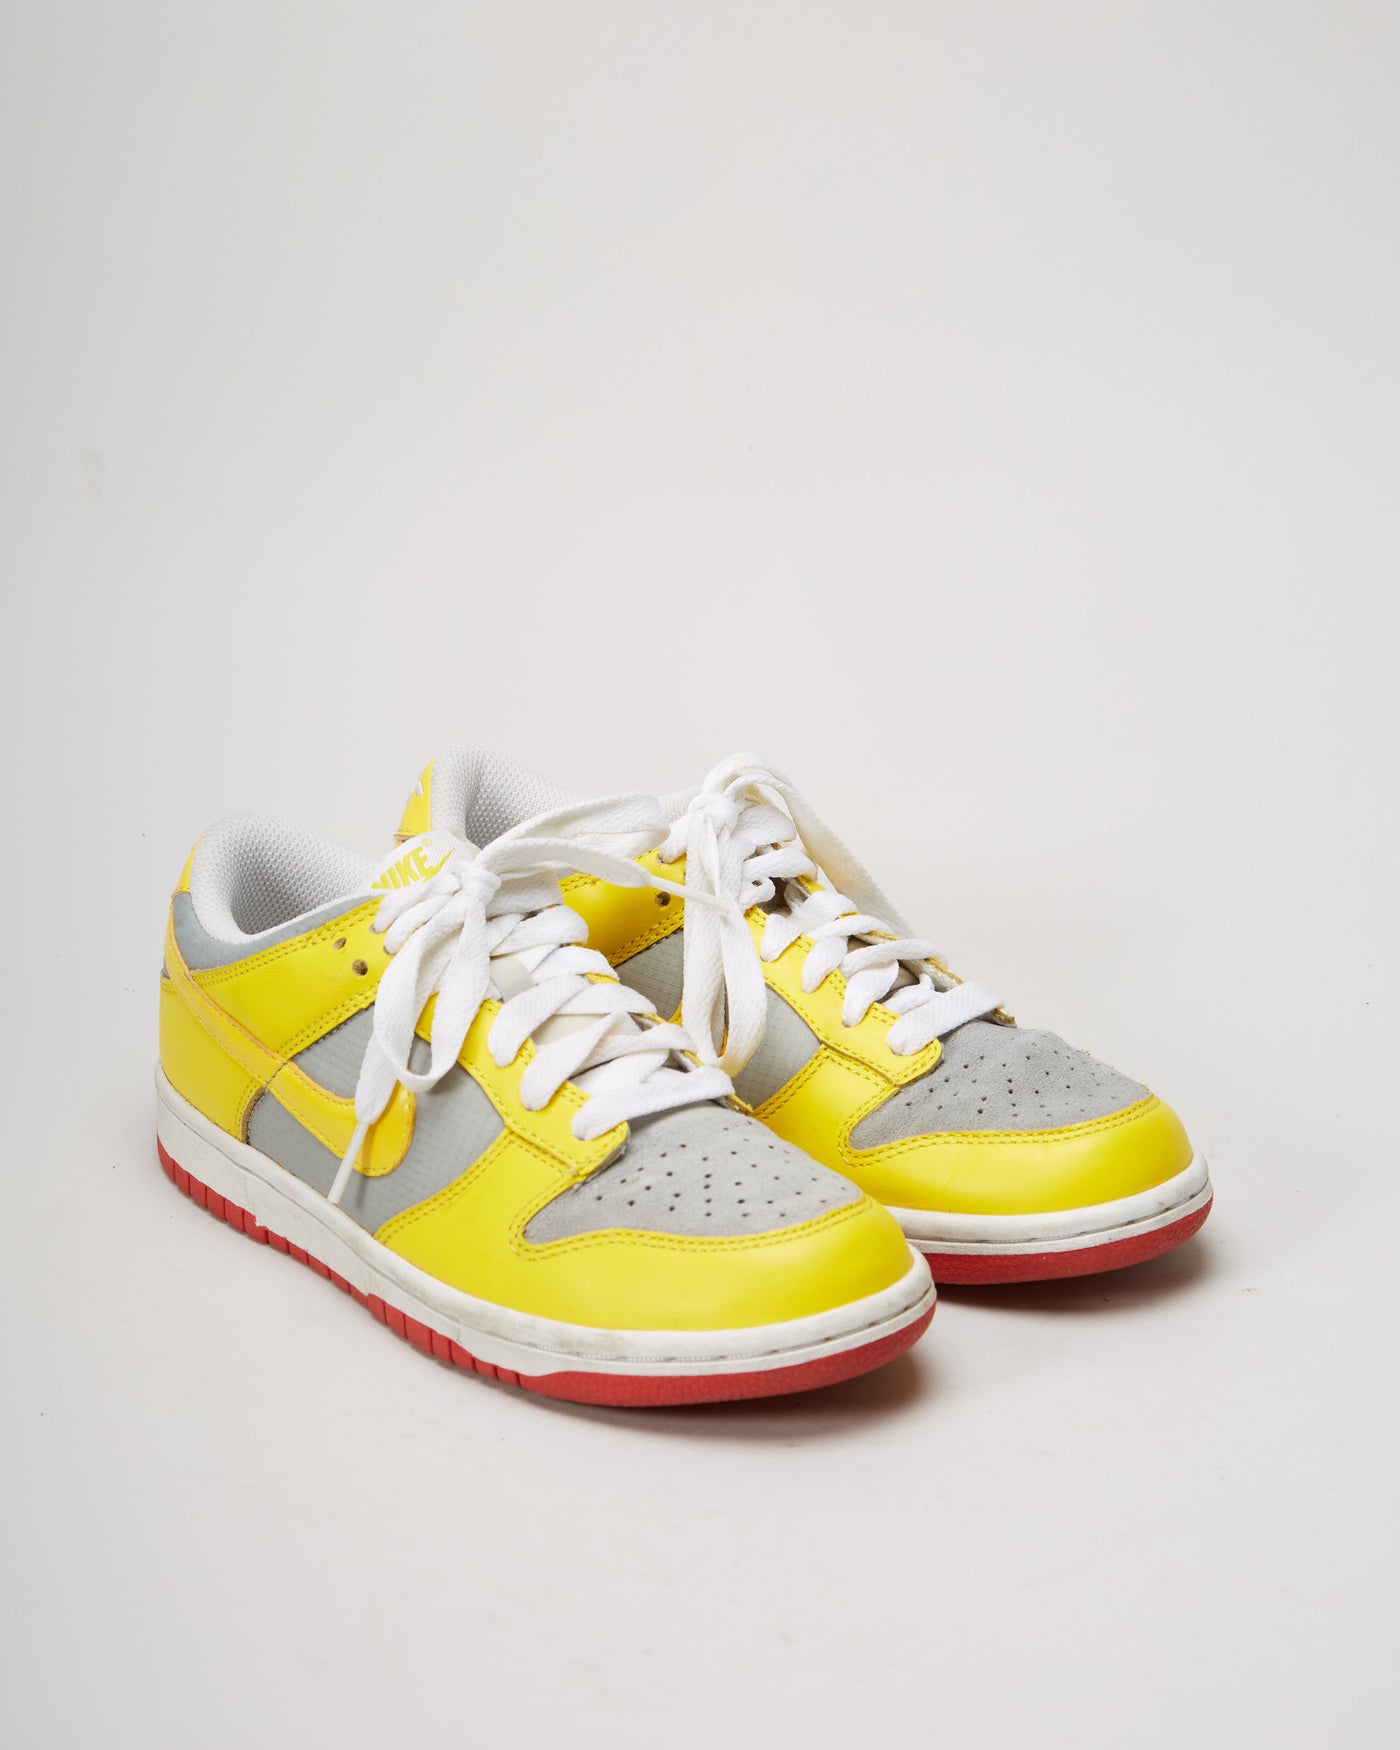 2008 Nike Dunks Yellow / Grey Shoes- UK 3